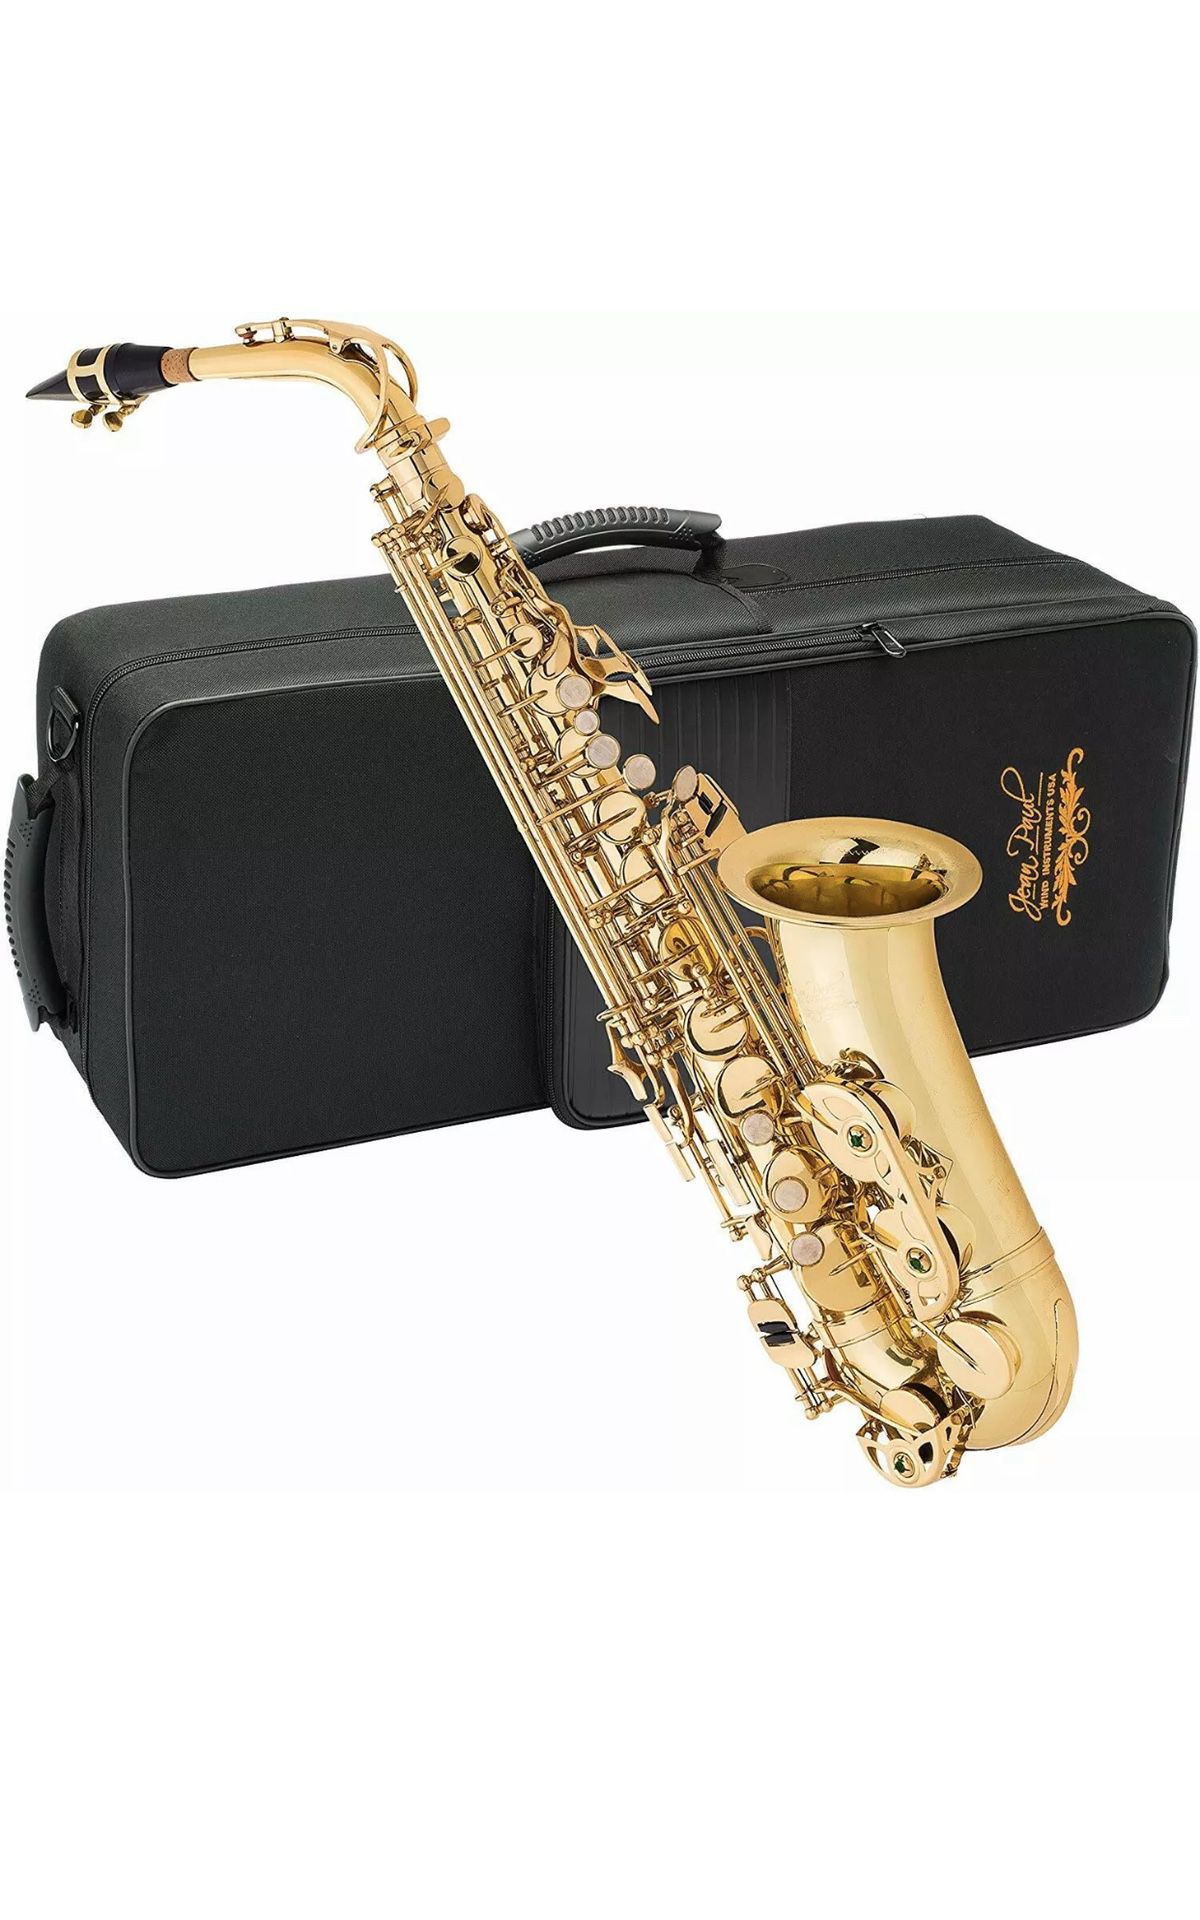 Jean Paul USA AS-400 Student Alto Saxophone Saxophone Brass